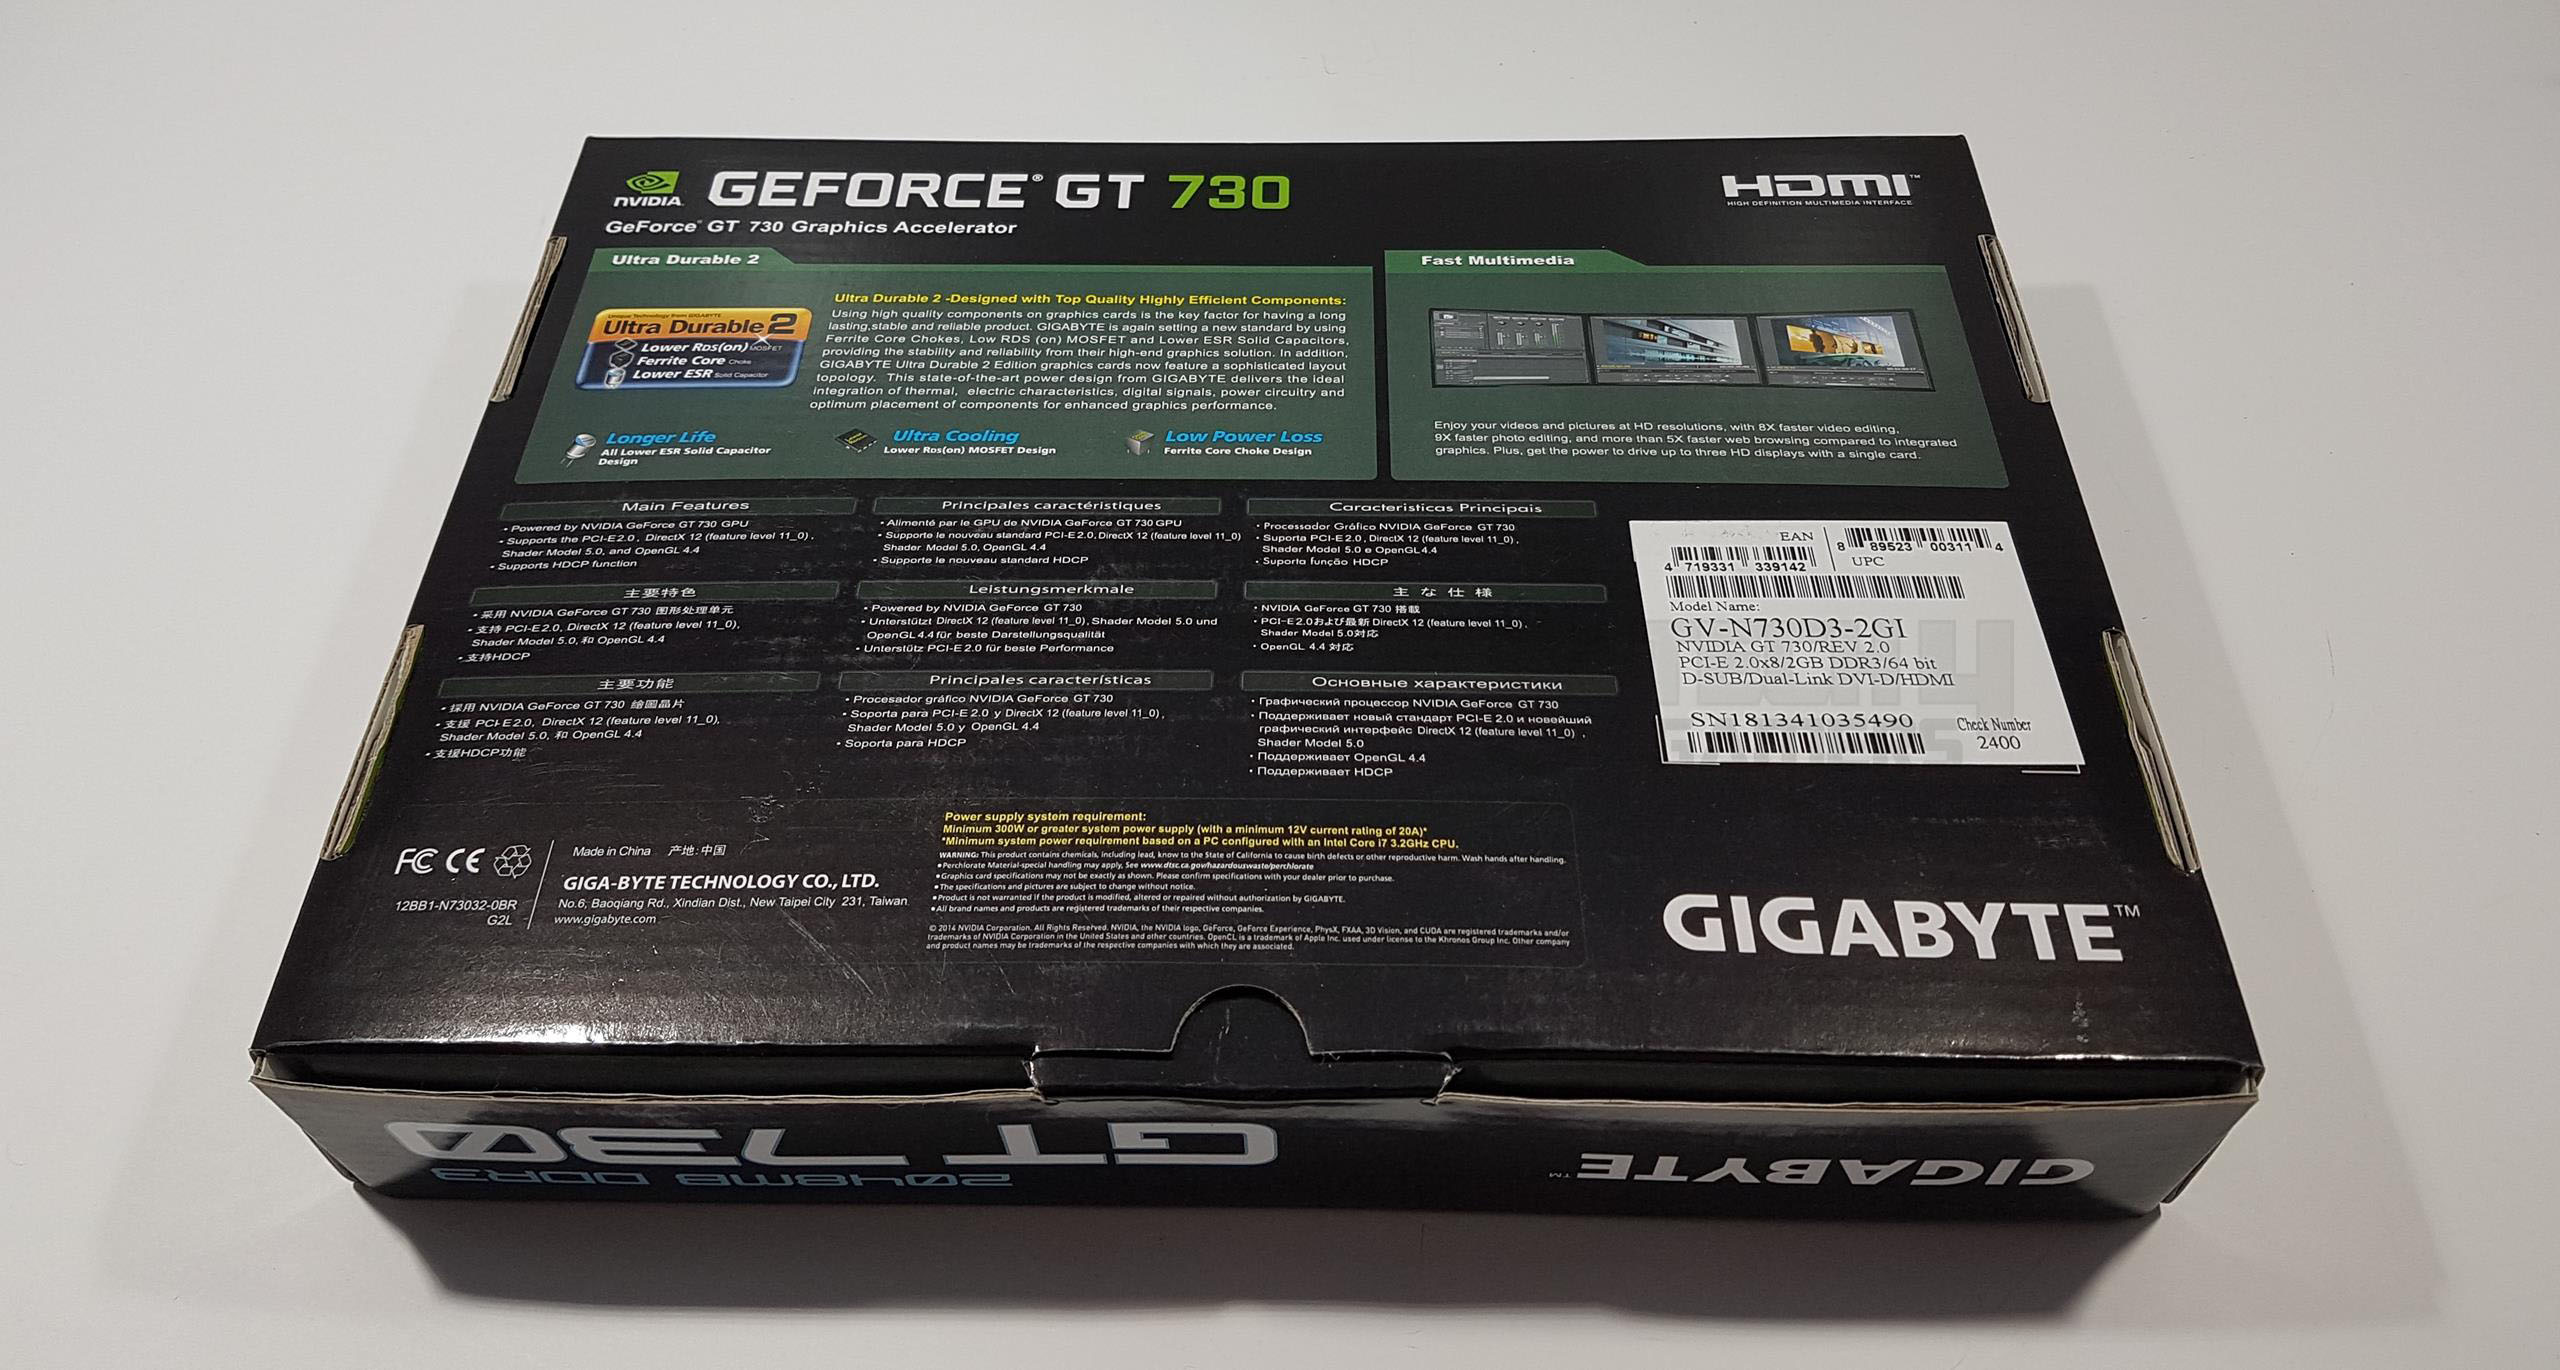 New MQX GeForce GTX 750 4GB OR GeForce GT 730 4GB PCIe Low Profile Video  Card US